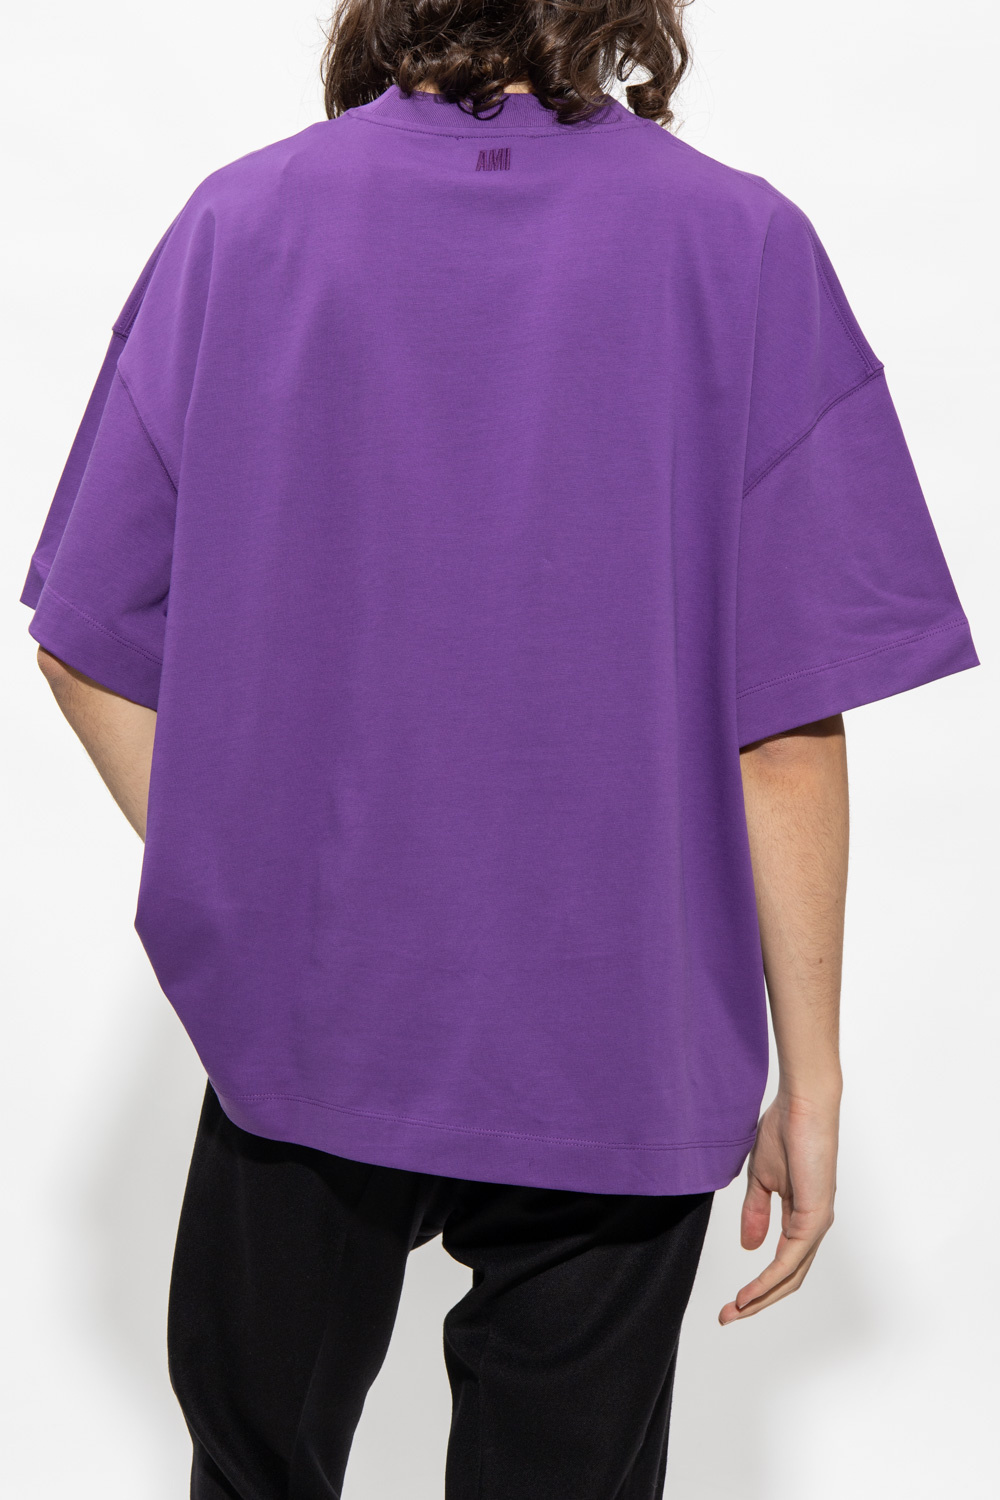 Ami Alexandre Mattiussi Reebok Classics Womens Cropped T-Shirt